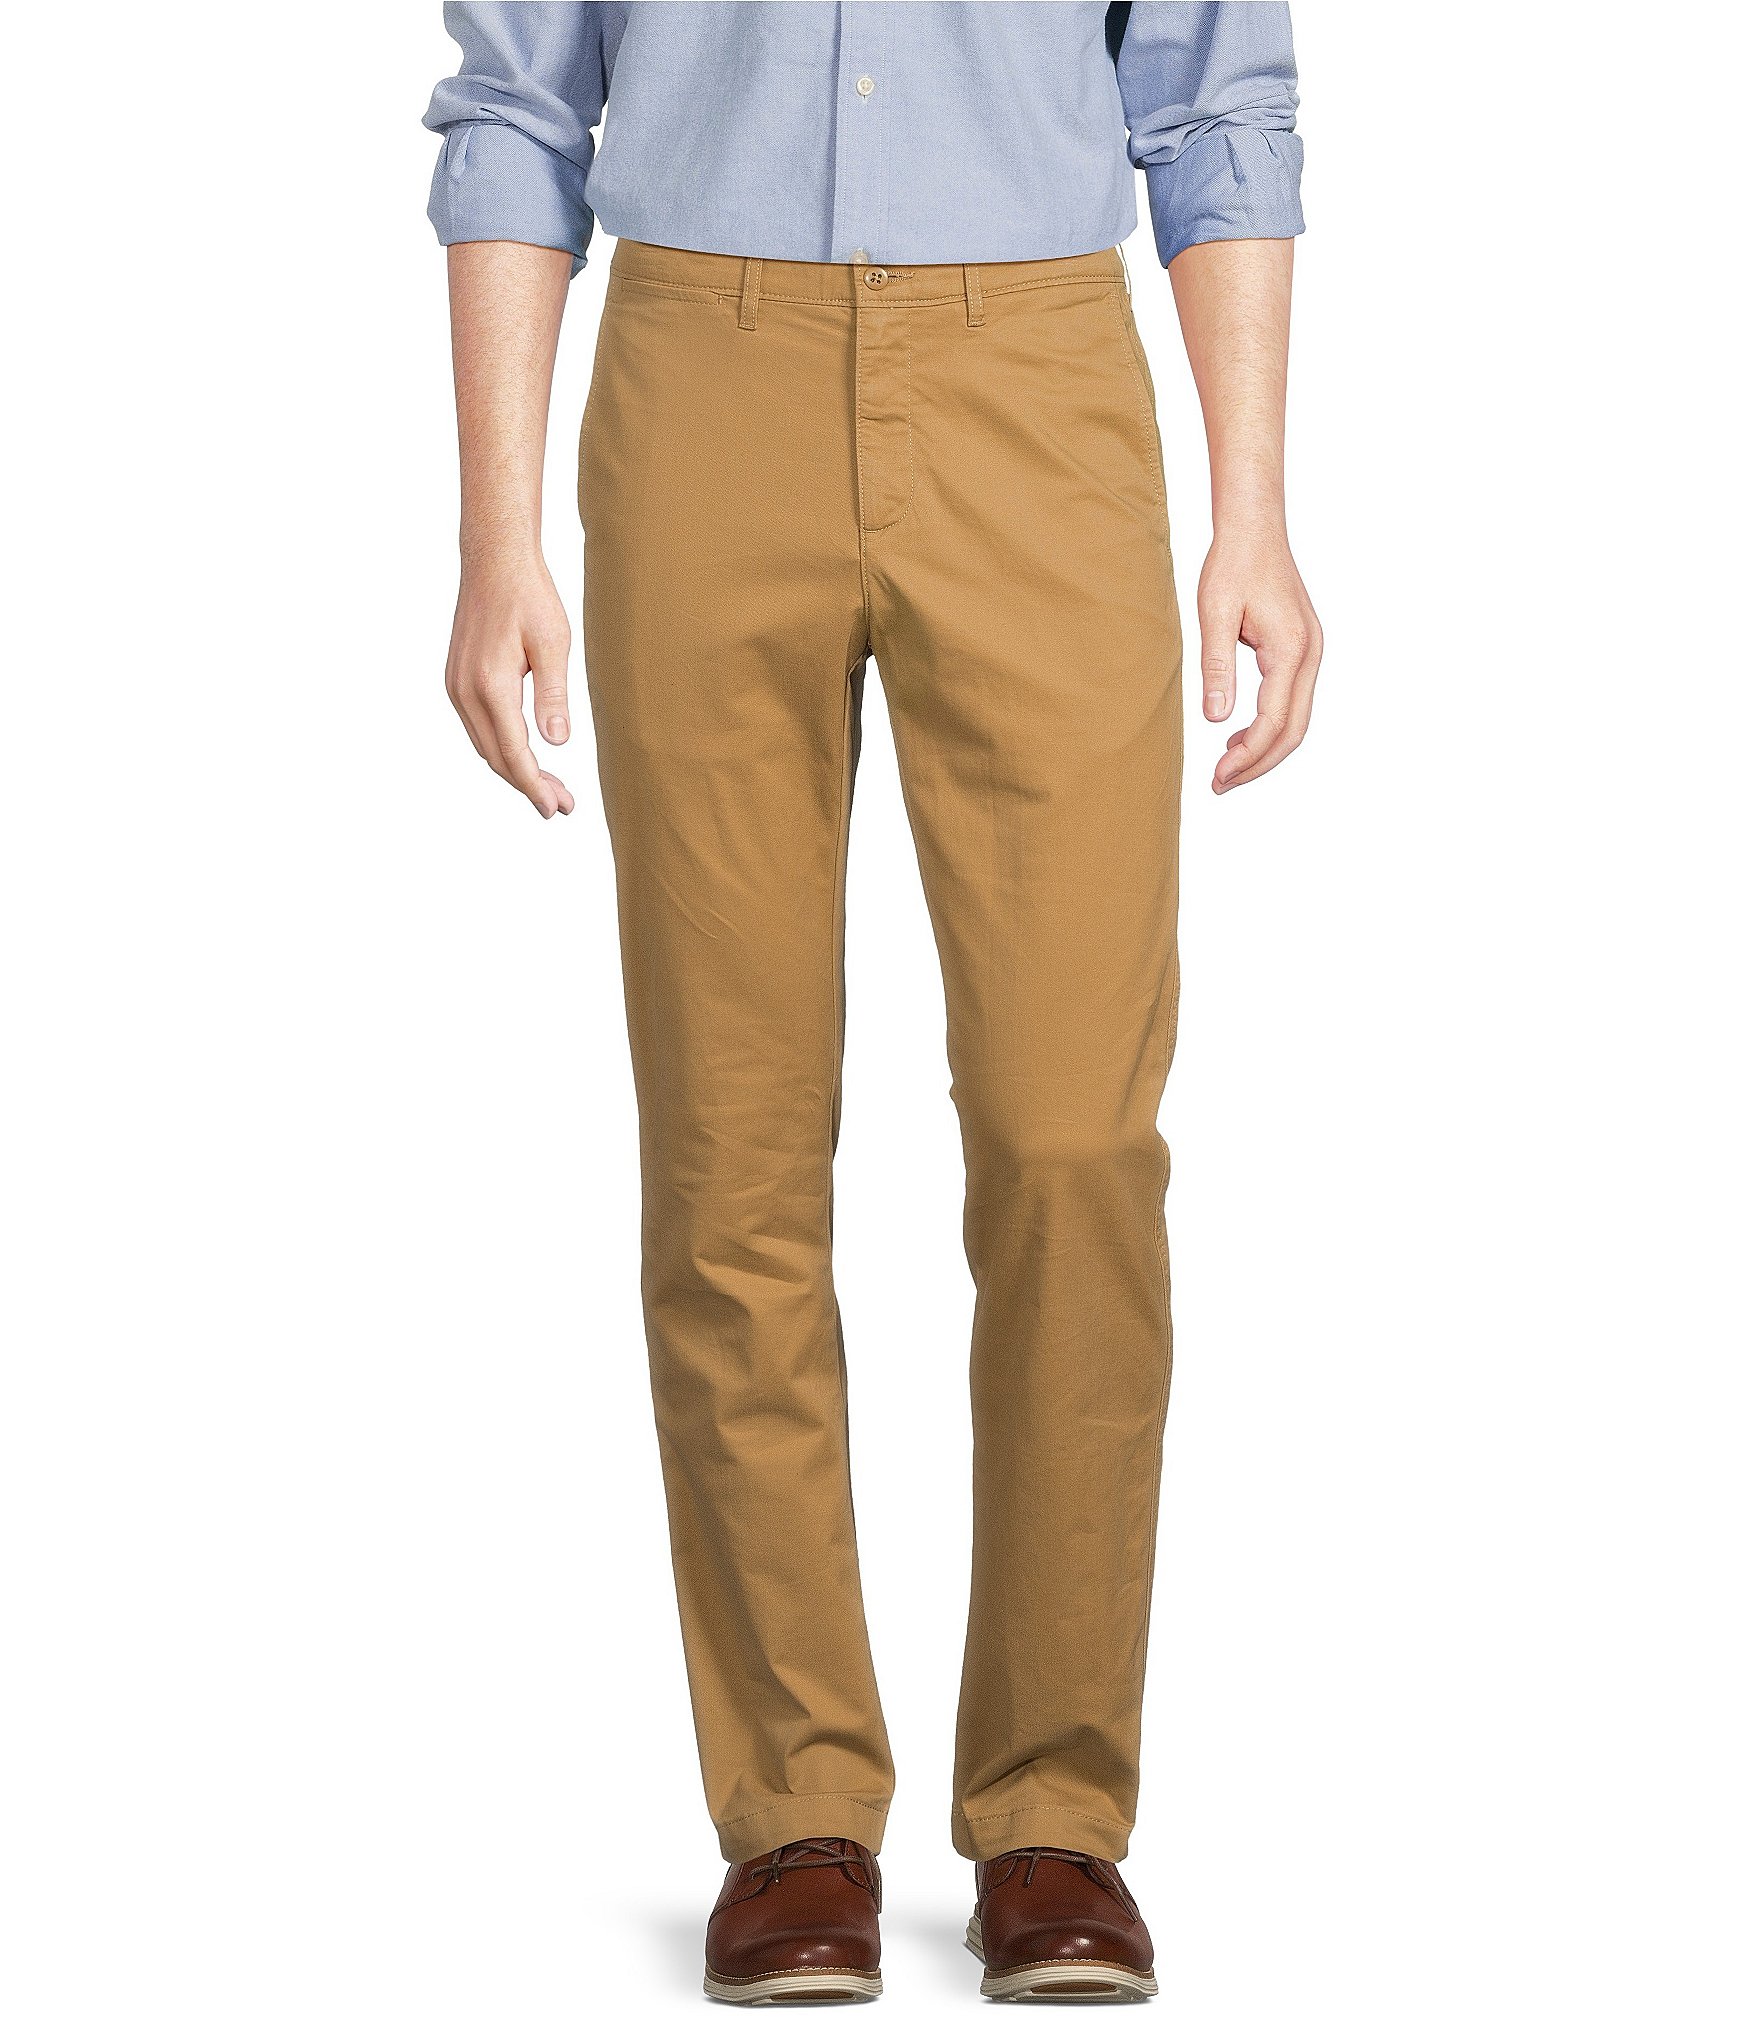 SCHWARZER Mens Cotton Linen Casual Pants Lightweight Elastic Waistband  Drawstring Big & Tall Straight Leg Trousers(S-5XL) Beige at Amazon Men's  Clothing store